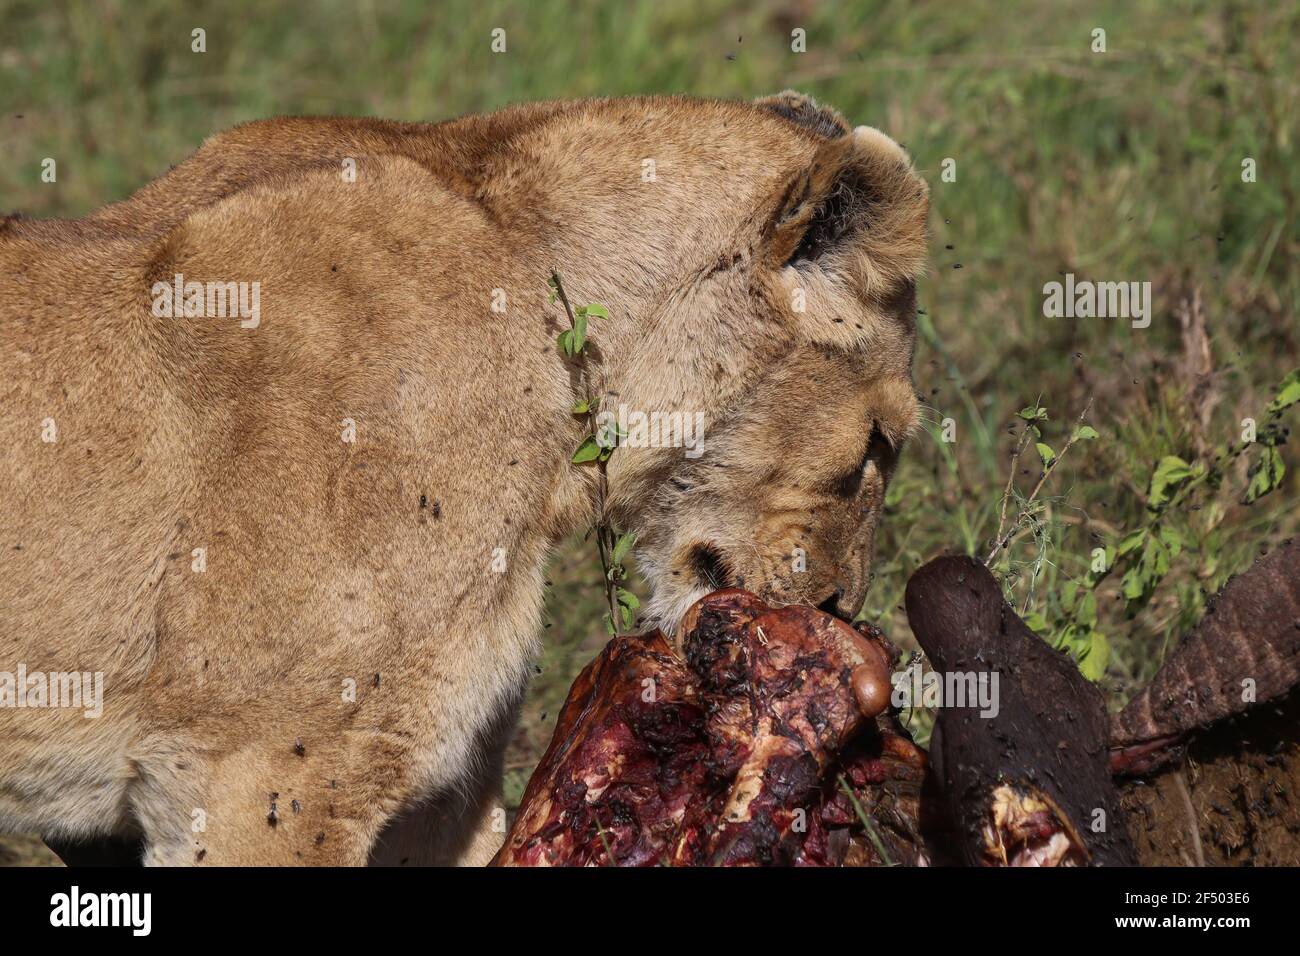 The Lions of the Serengeti, Tanzania Stock Photo